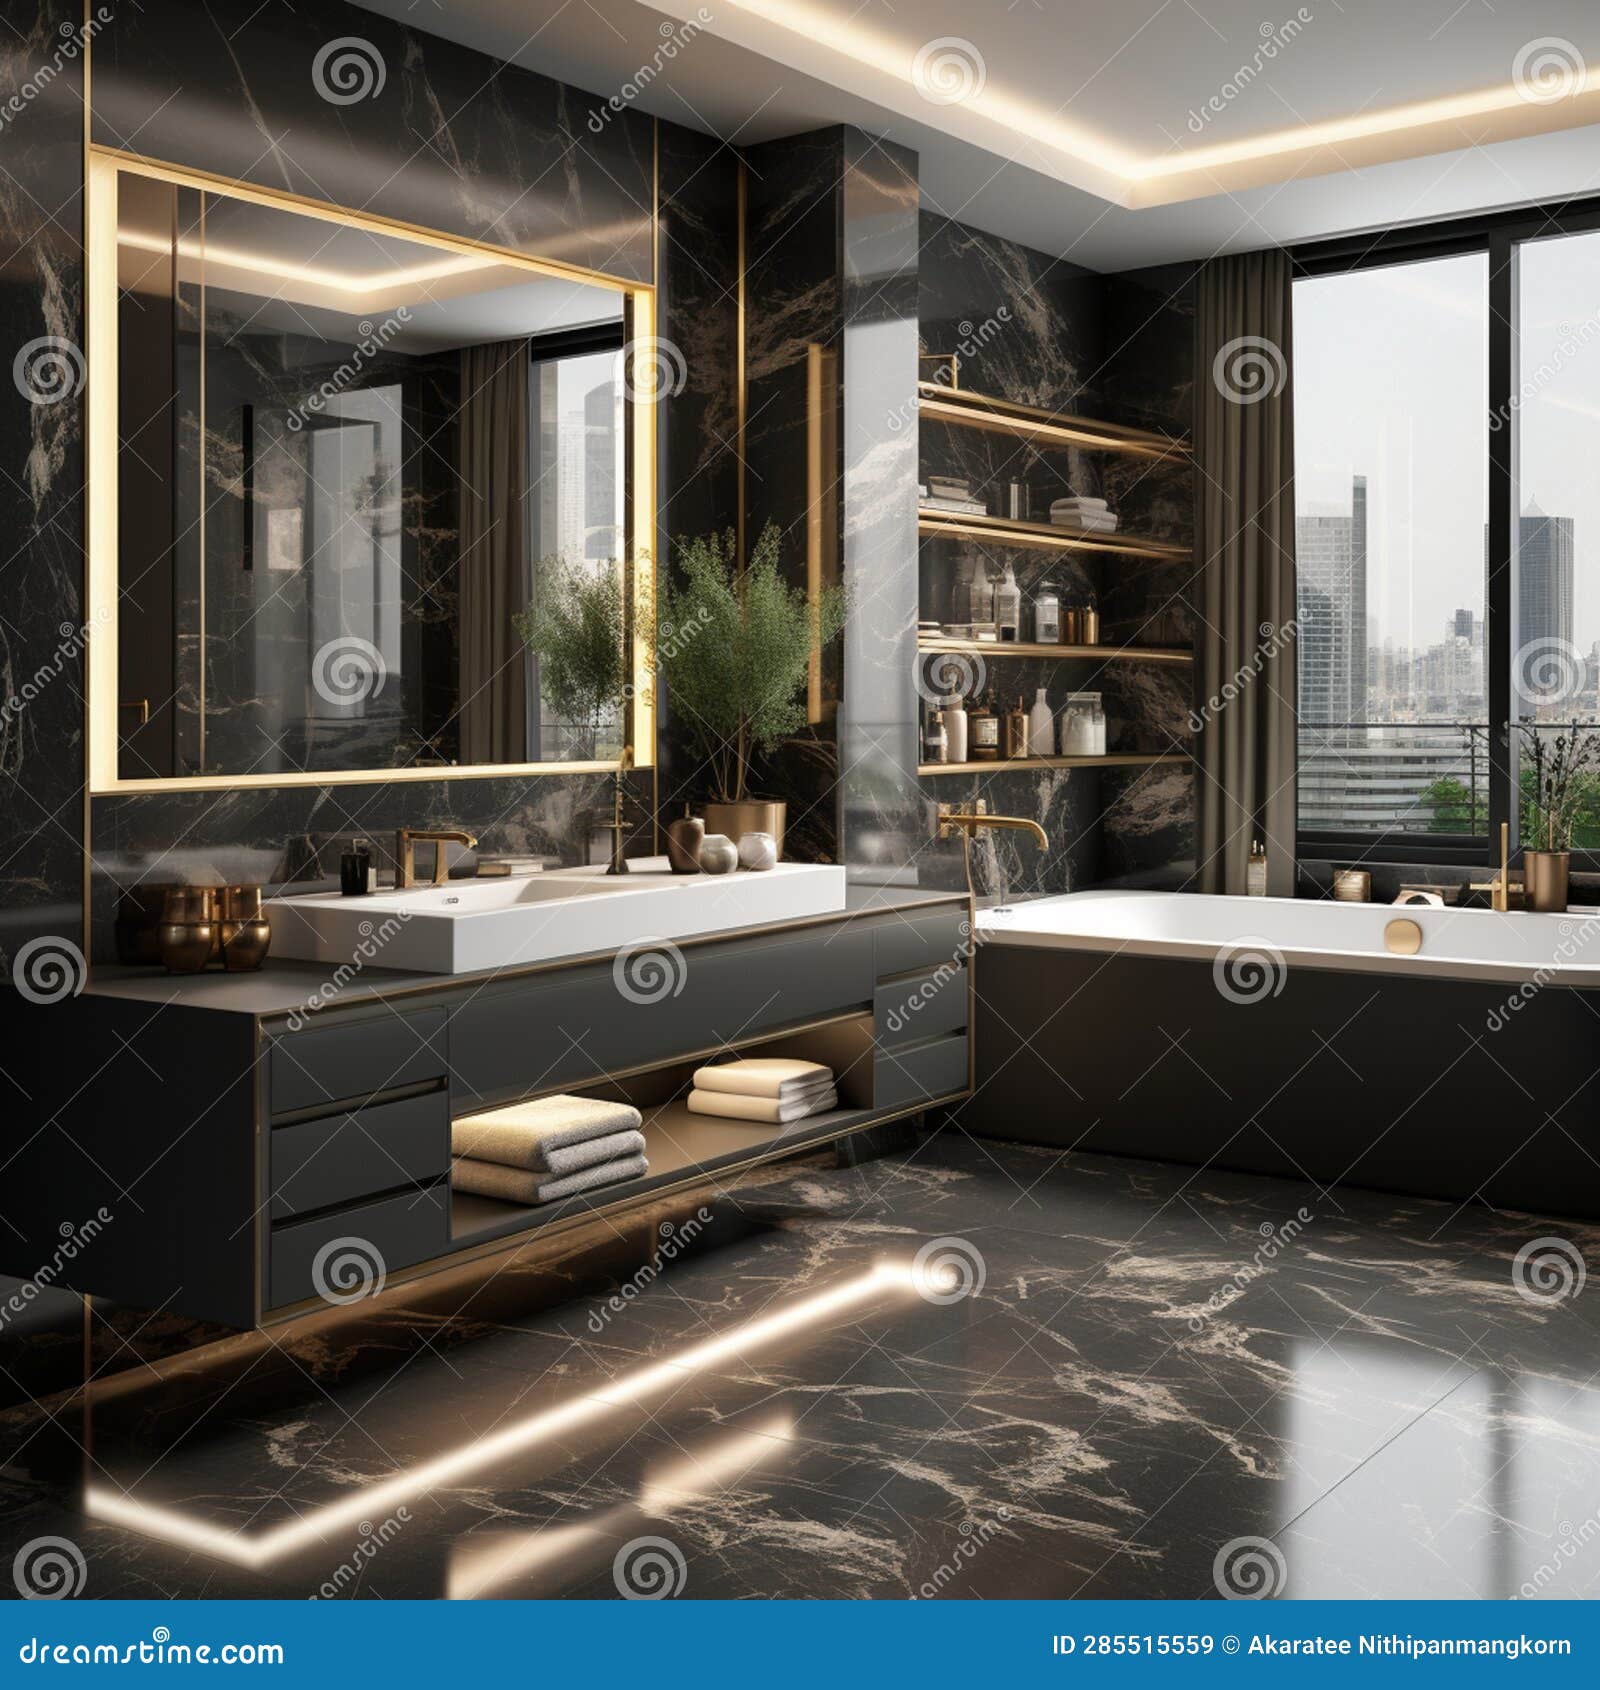 Interior Design of a Spacious Modern Luxury Bathroom Stock Image ...